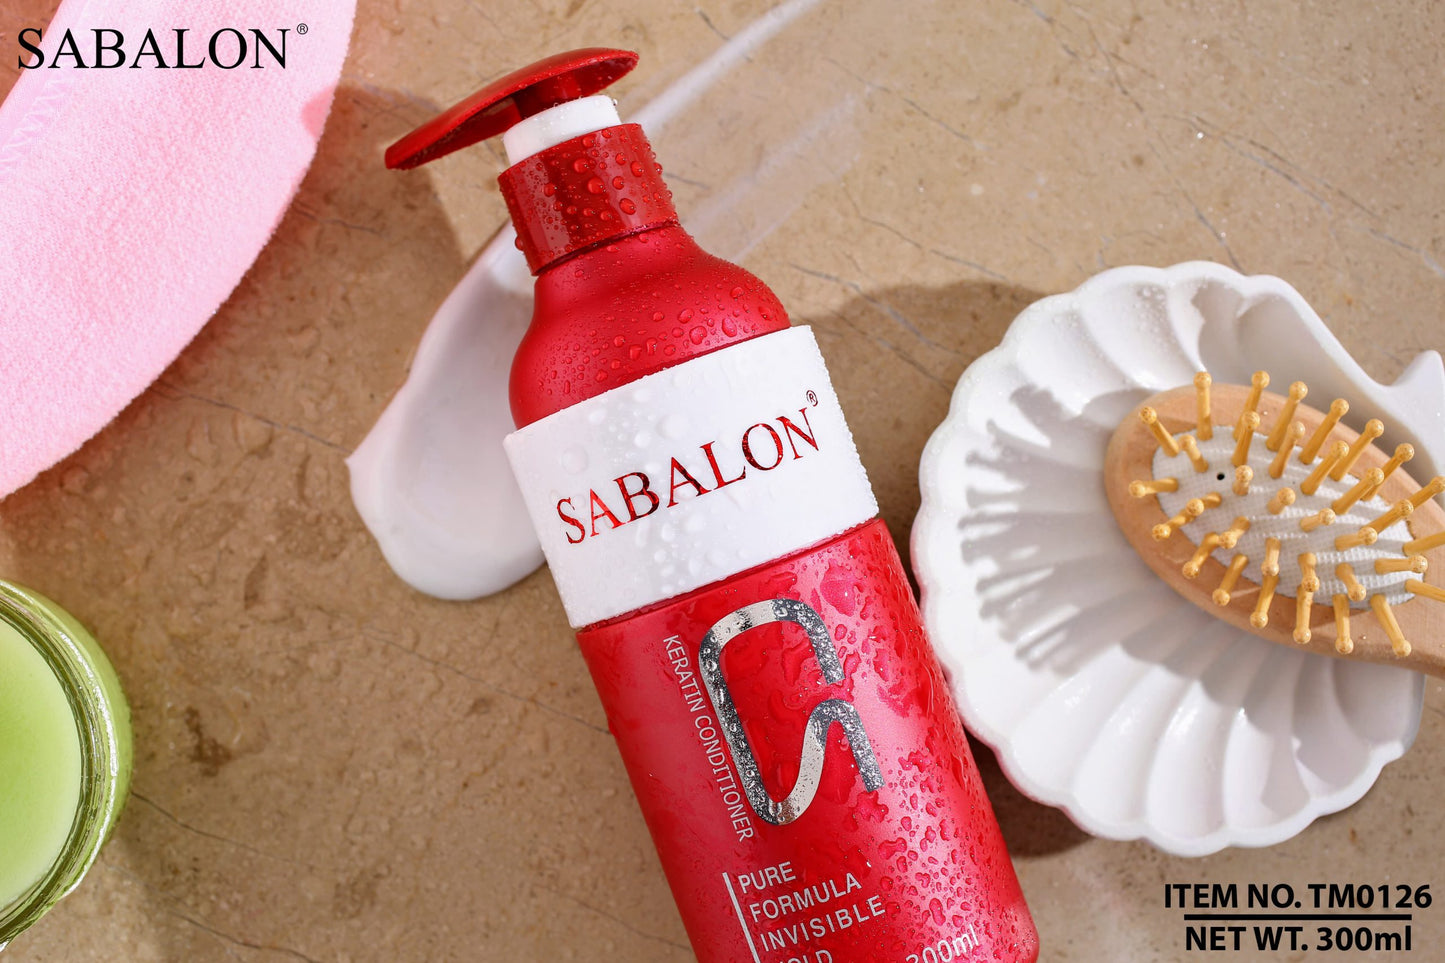 Sabalon Keratin Hair Conditioner 300ml for Silky, Luxurious Locks